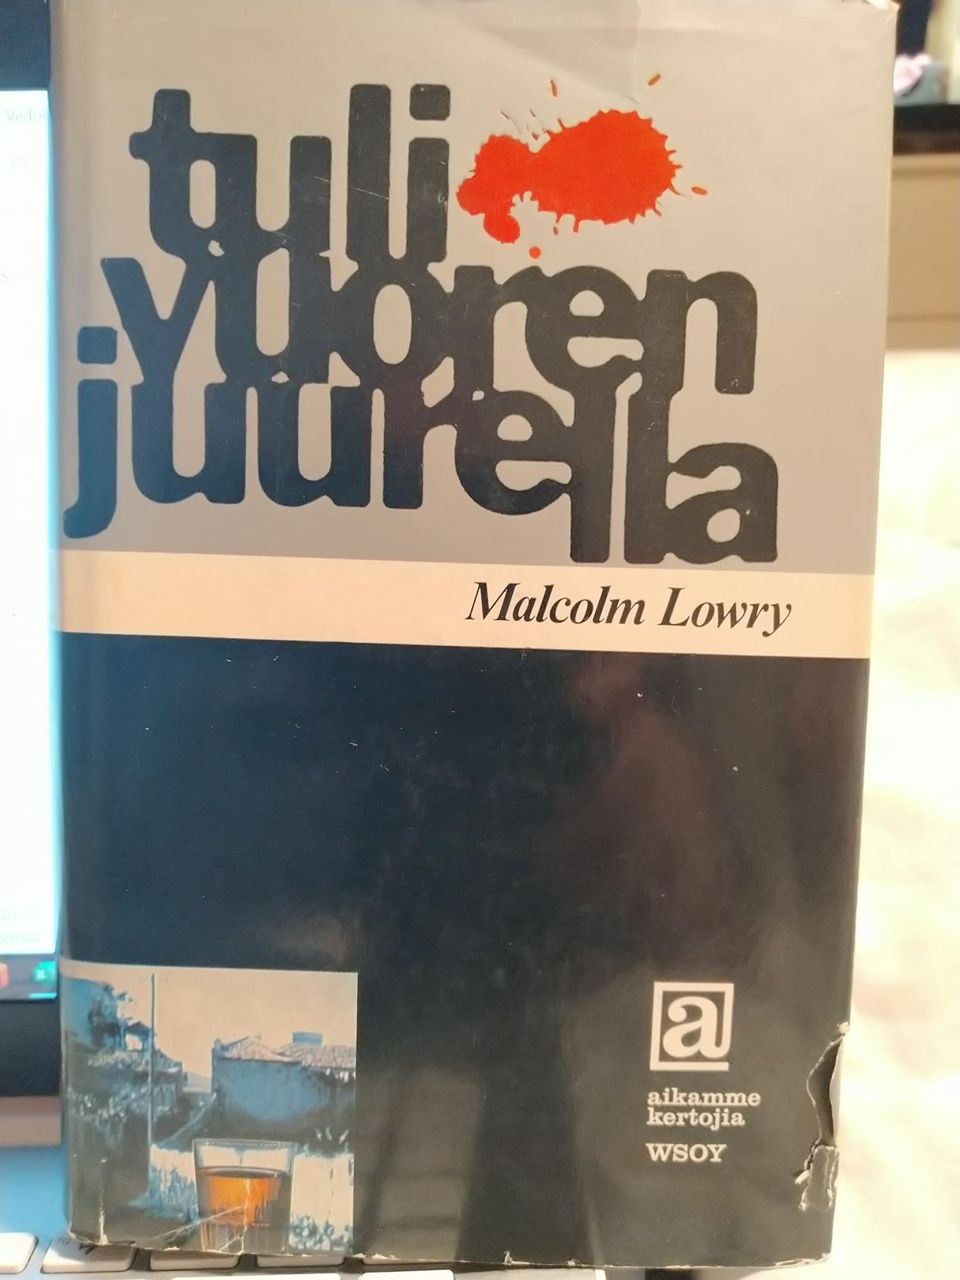 Tulivuoren juurella - Malcolm Lowry